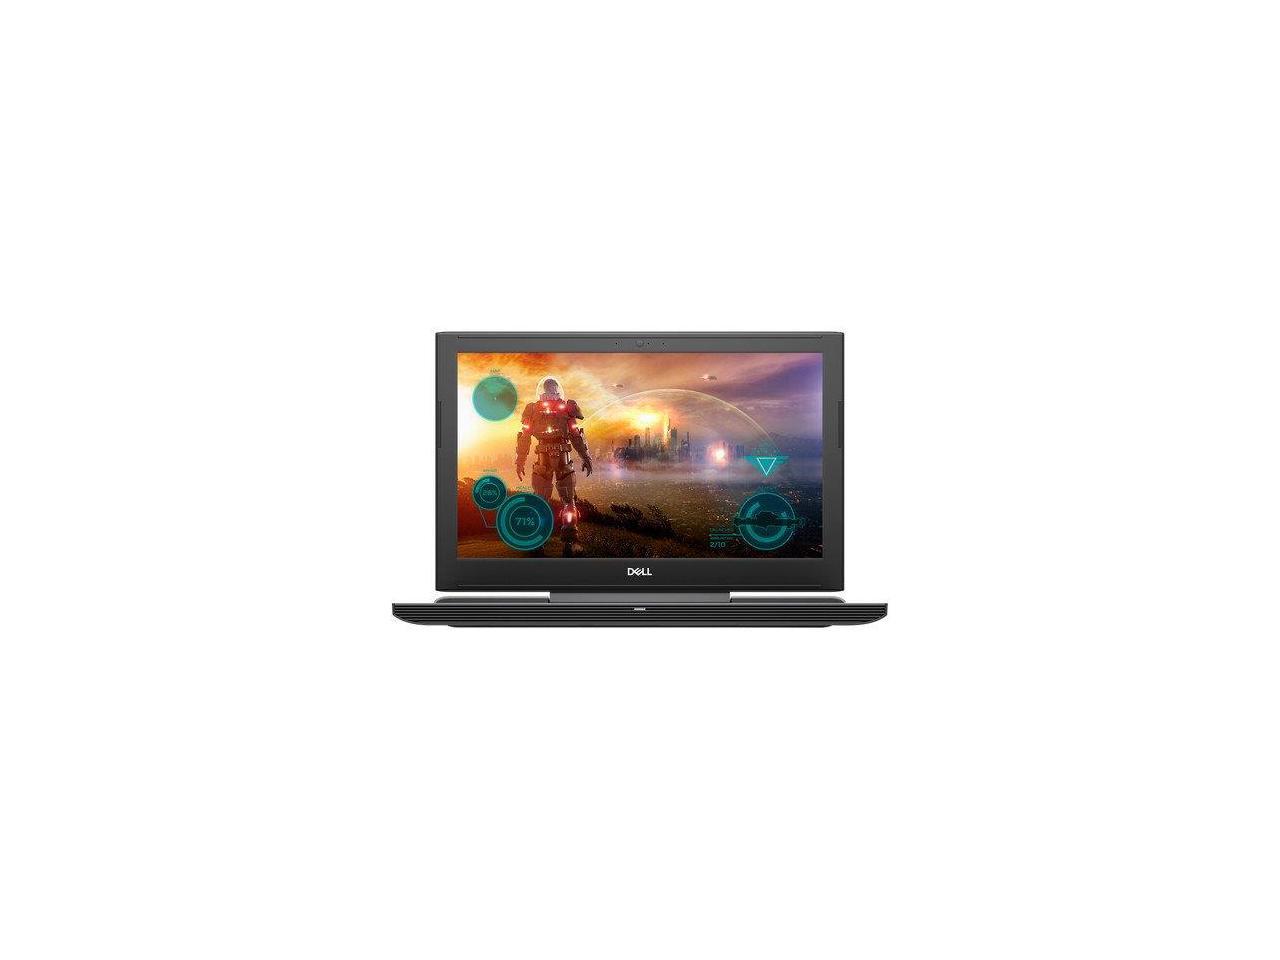 Dell Inspiron 7000 15.6" IPS FHD Gaming Laptop | VR Ready | Intel Quad Core i5-7300HQ | 32GB RAM 256GB SSD 500GB HDD | NVIDIA GeForce GTX 1060 6GB GDDR5 | Windows 10 Black